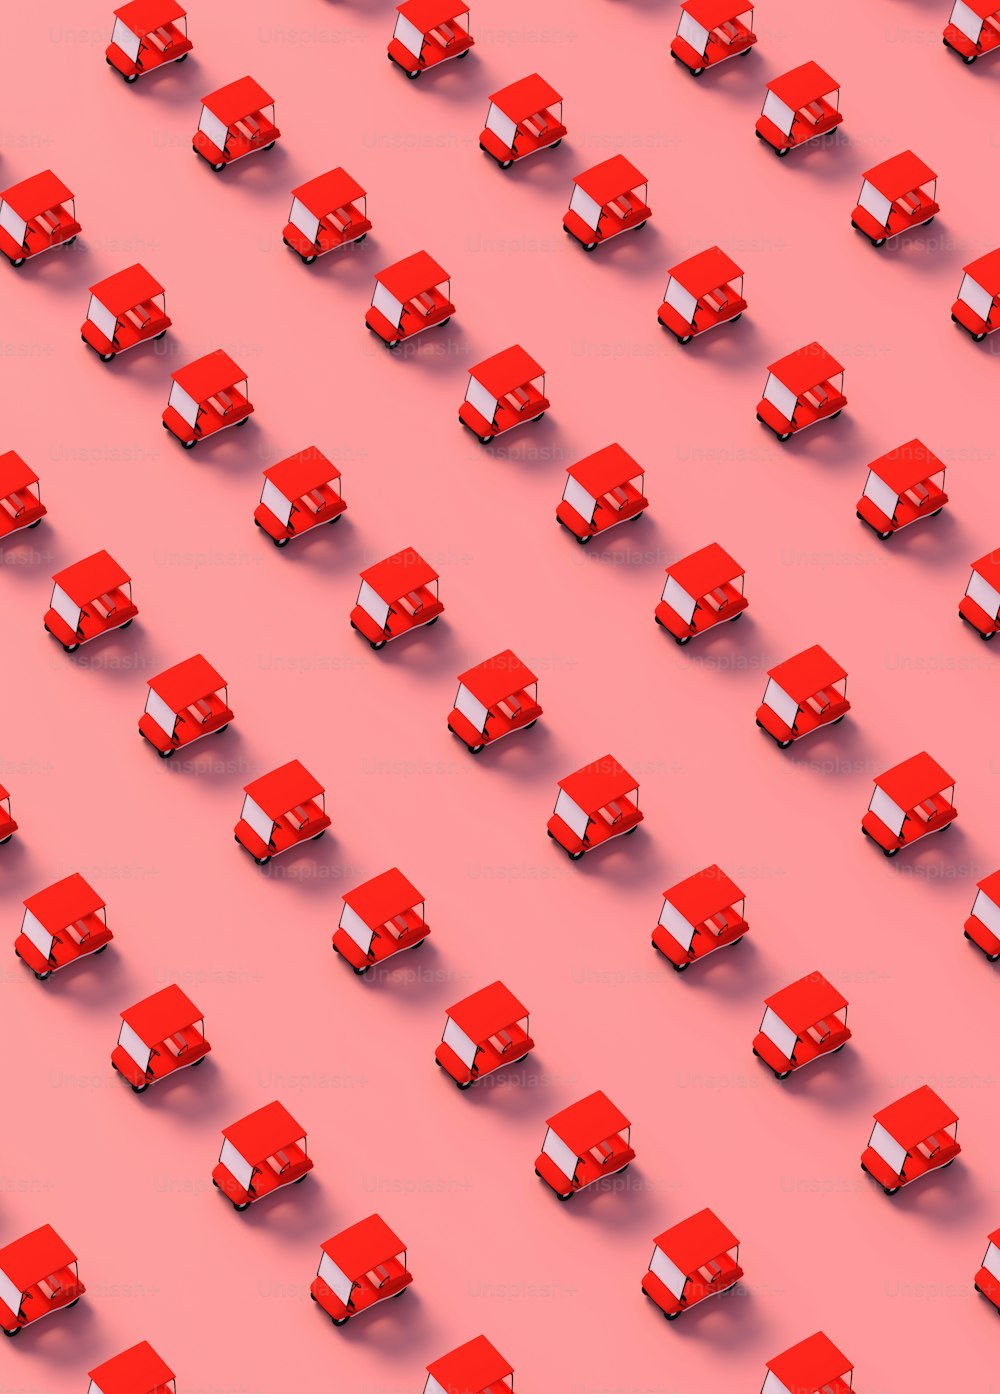 Un gran grupo de cubos rojos sobre un fondo rosa